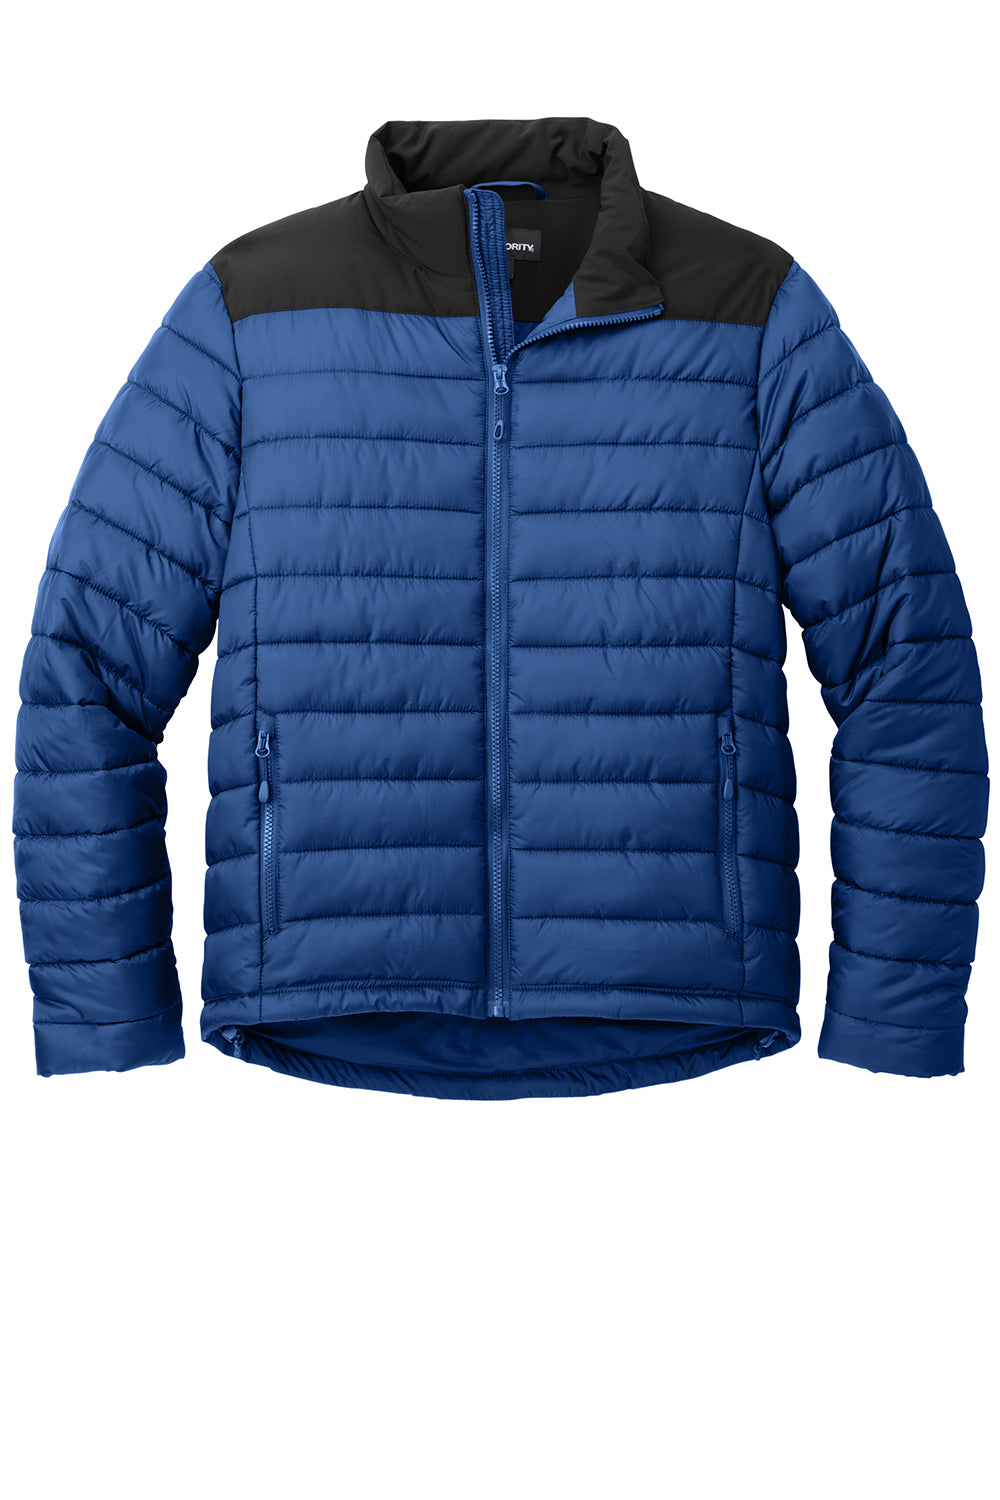 Port Authority J364 Mens Horizon Full Zip Puffy Jacket True Blue/Deep Black Flat Front